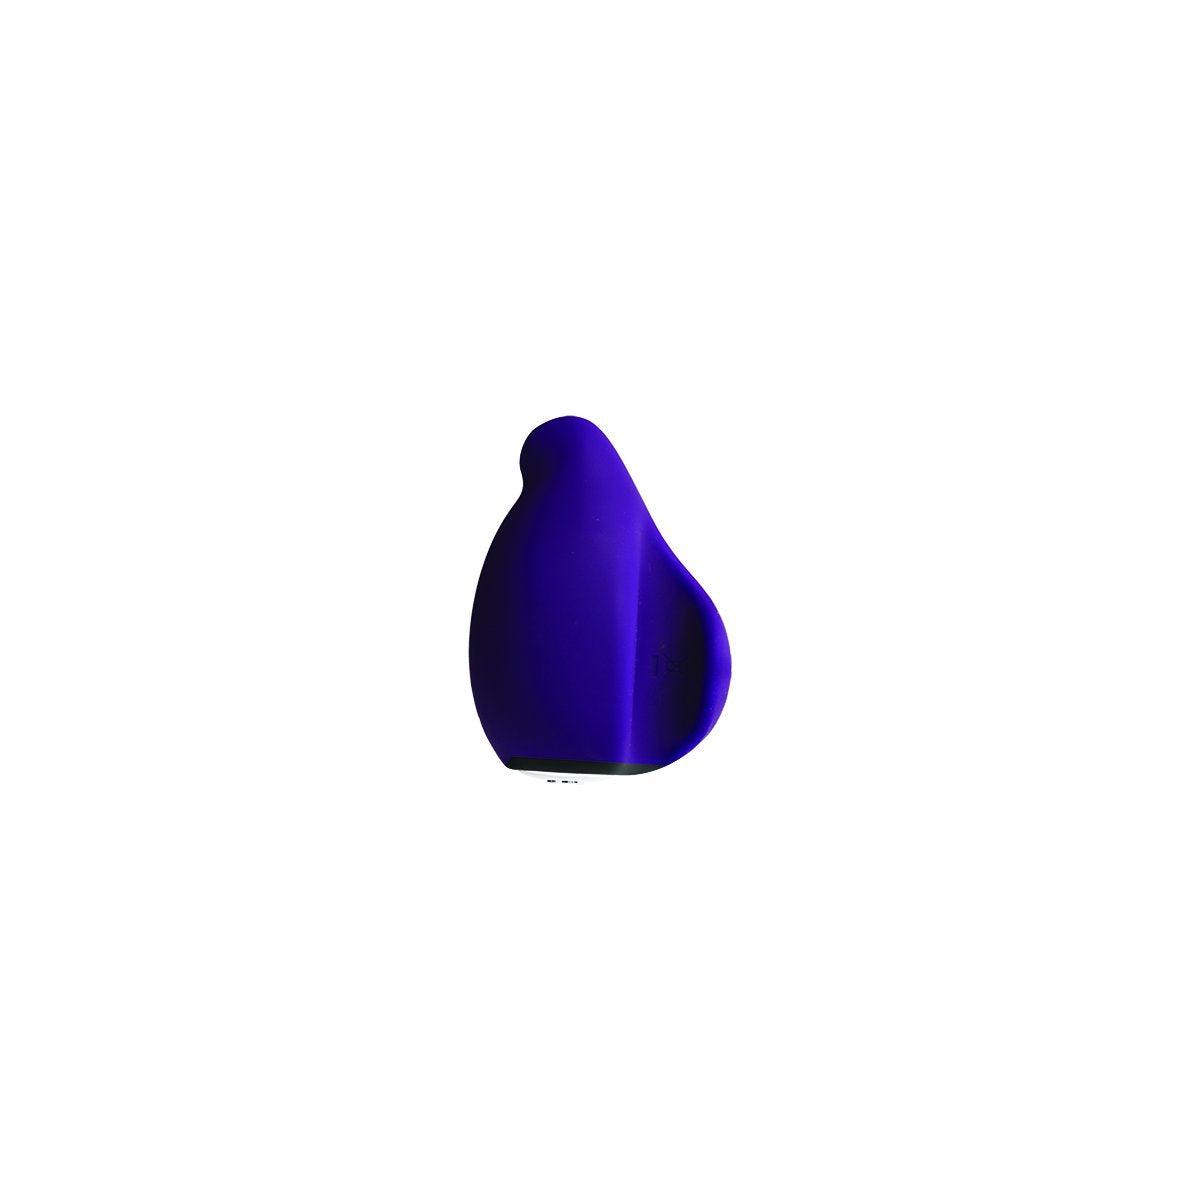 Dark Blue VeDO Yumi Finger Vibe - Purple